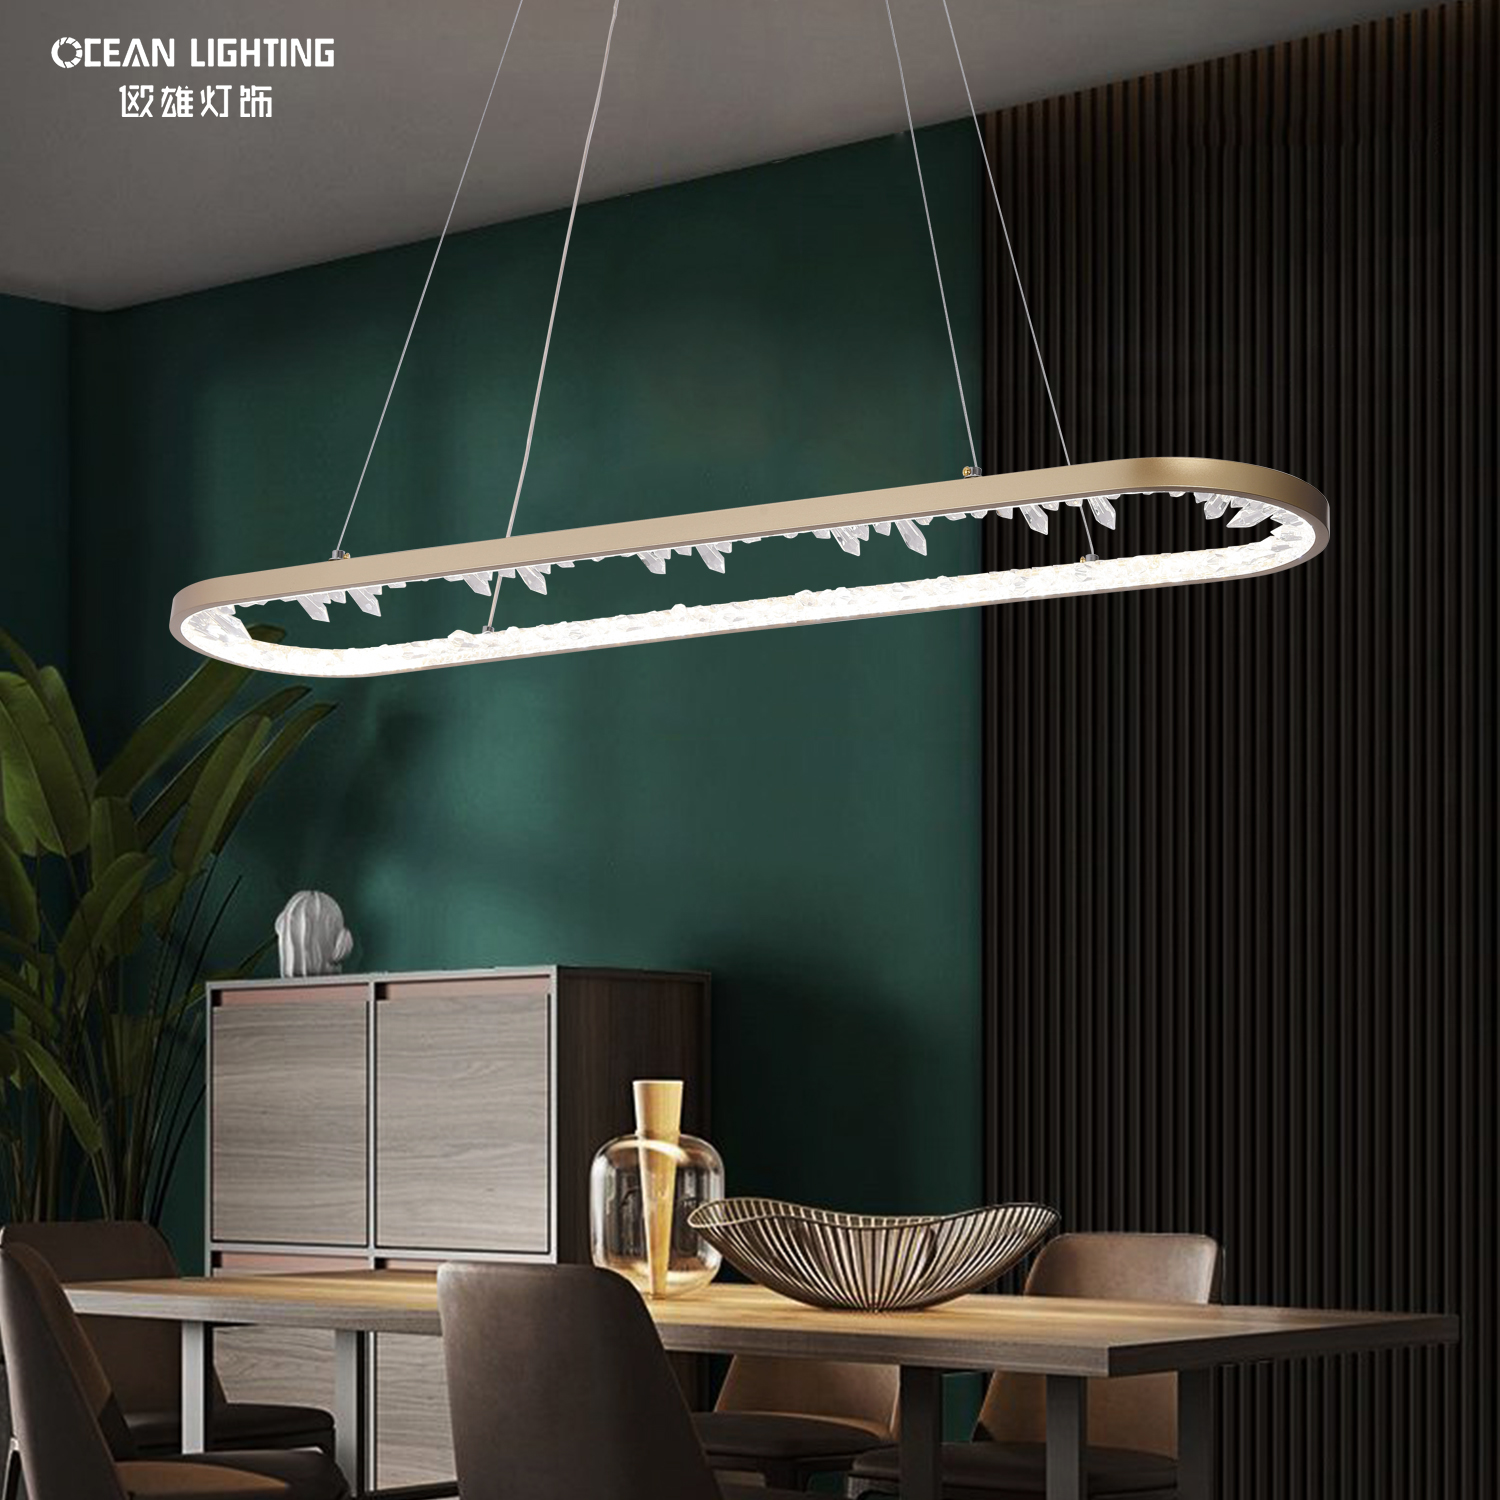 OCEAN LAMP Pendant light LED Oval shape modern decorative lighting fixture chandelier